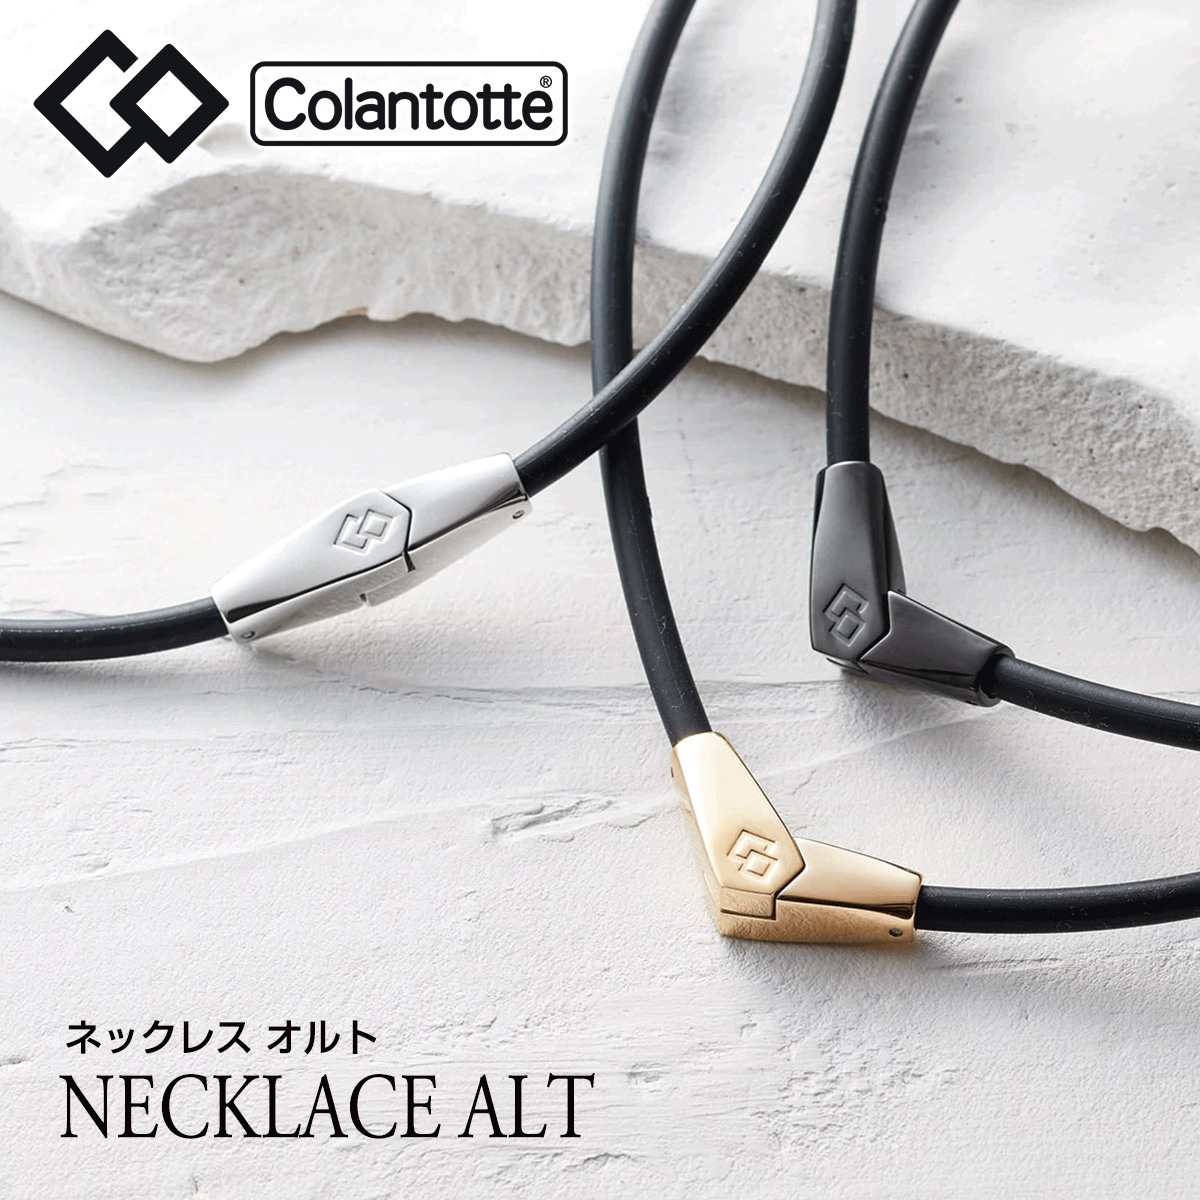 ColanTotte日本正規品 コラントッテ ネックレス ALT(オルト)  男女兼用 磁気ネックレス 「ABARA」